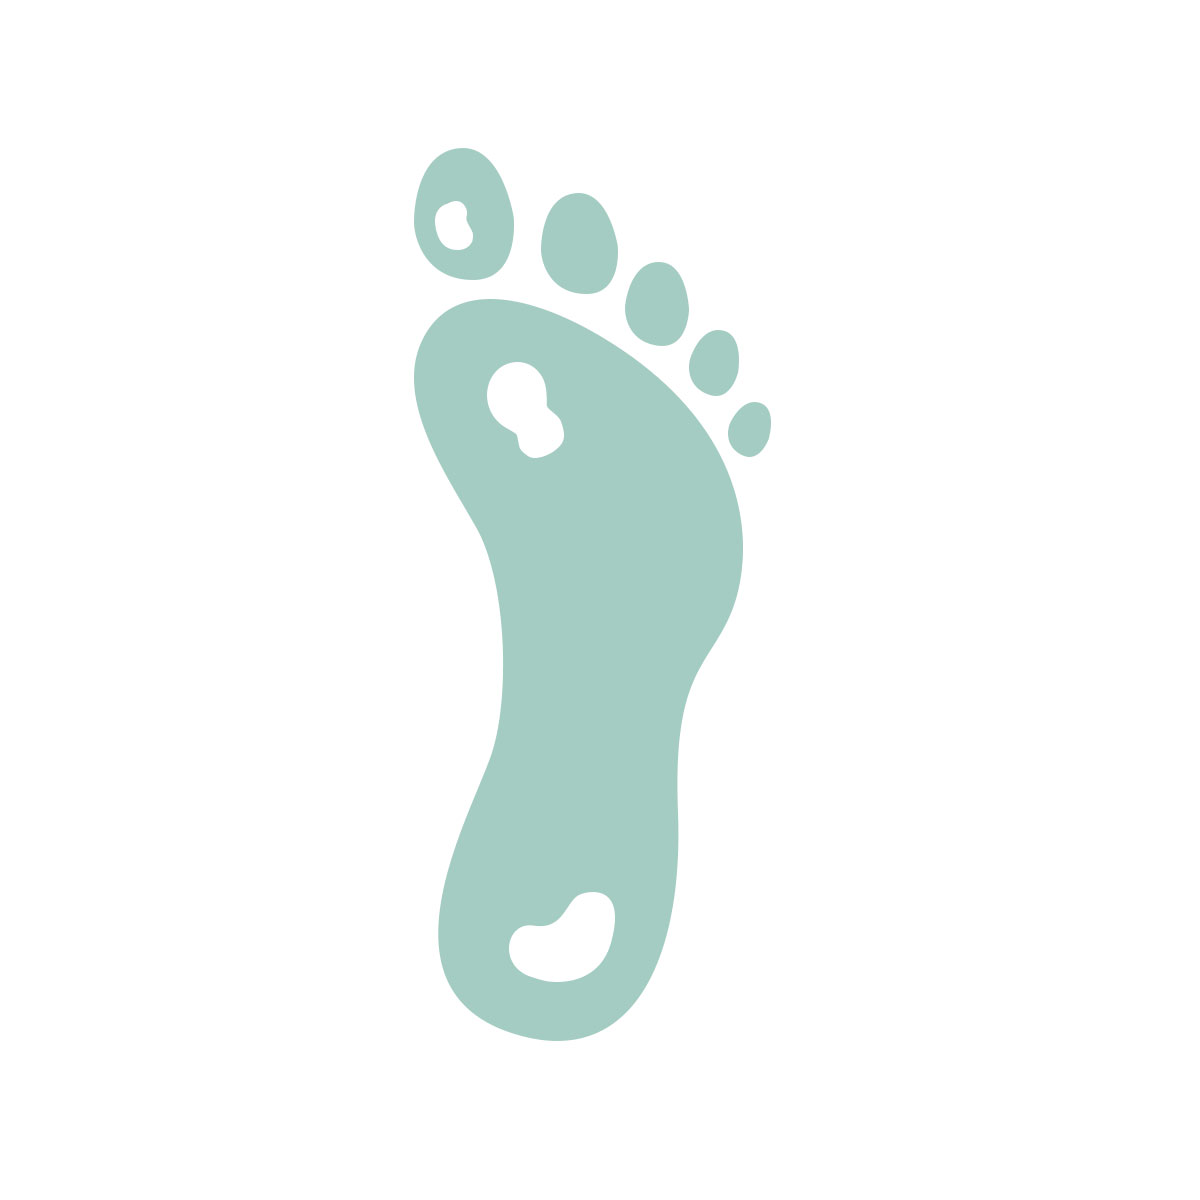 Gawler Balaklava Podiatry Foot Care and Diabetes Feet Treatments